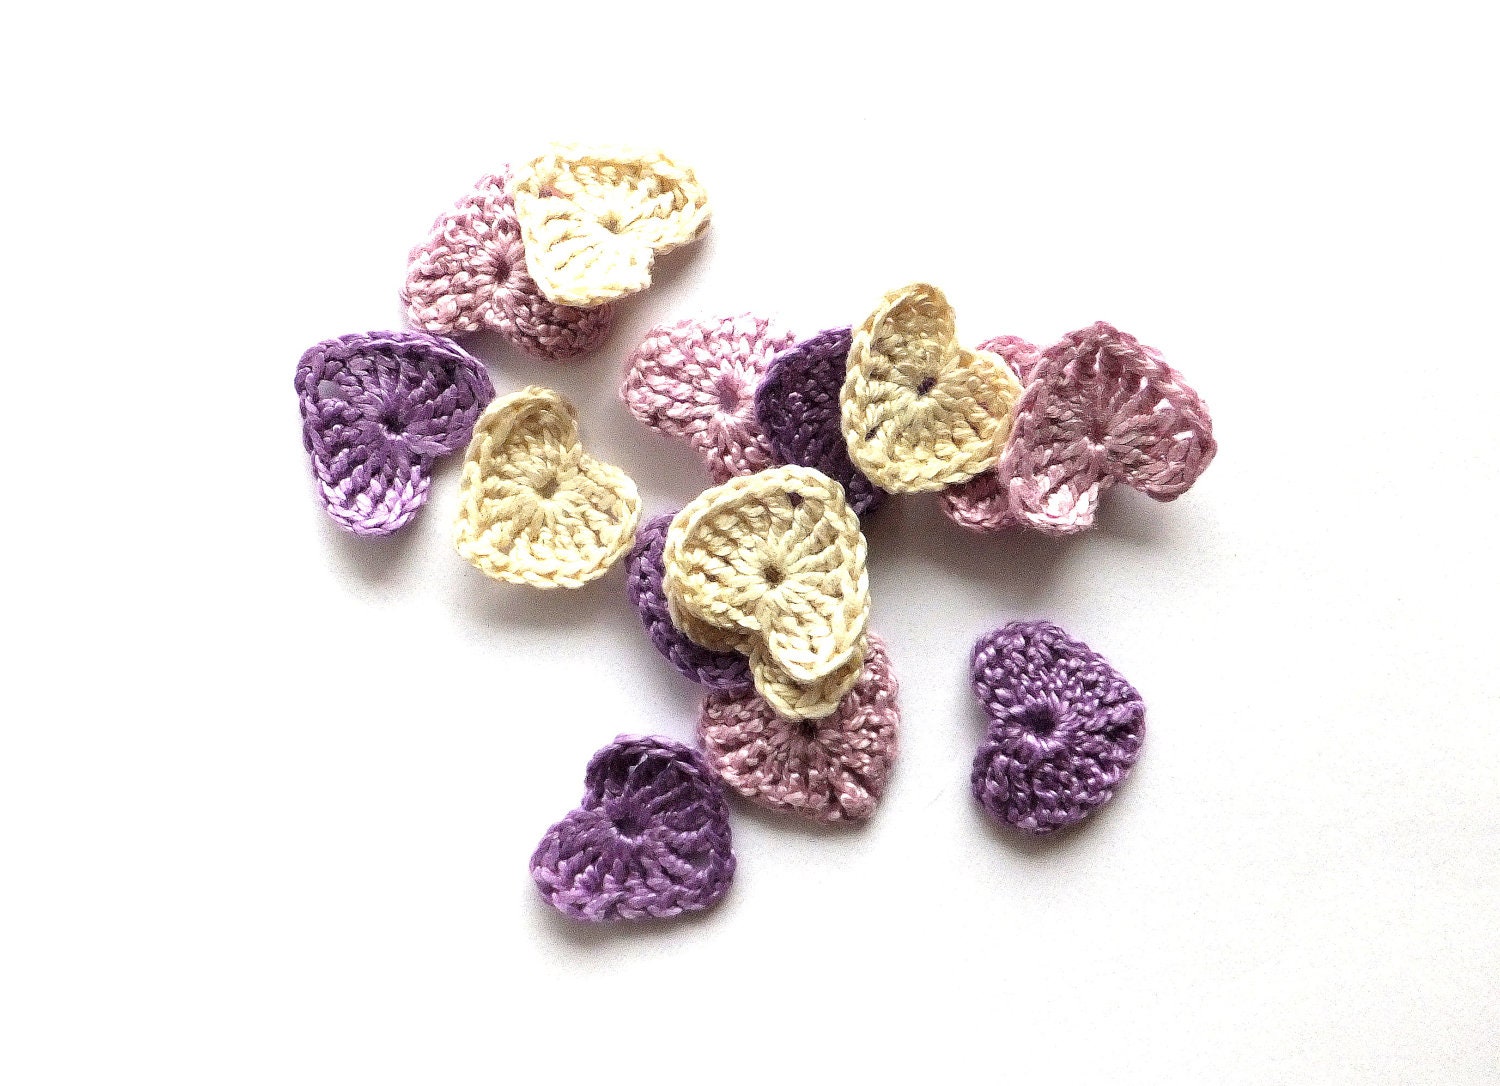 Crocheted hearts - small applique, embellishments, scrapbooking, lavender wedding decorations, favors /set of 15/ - eljuks